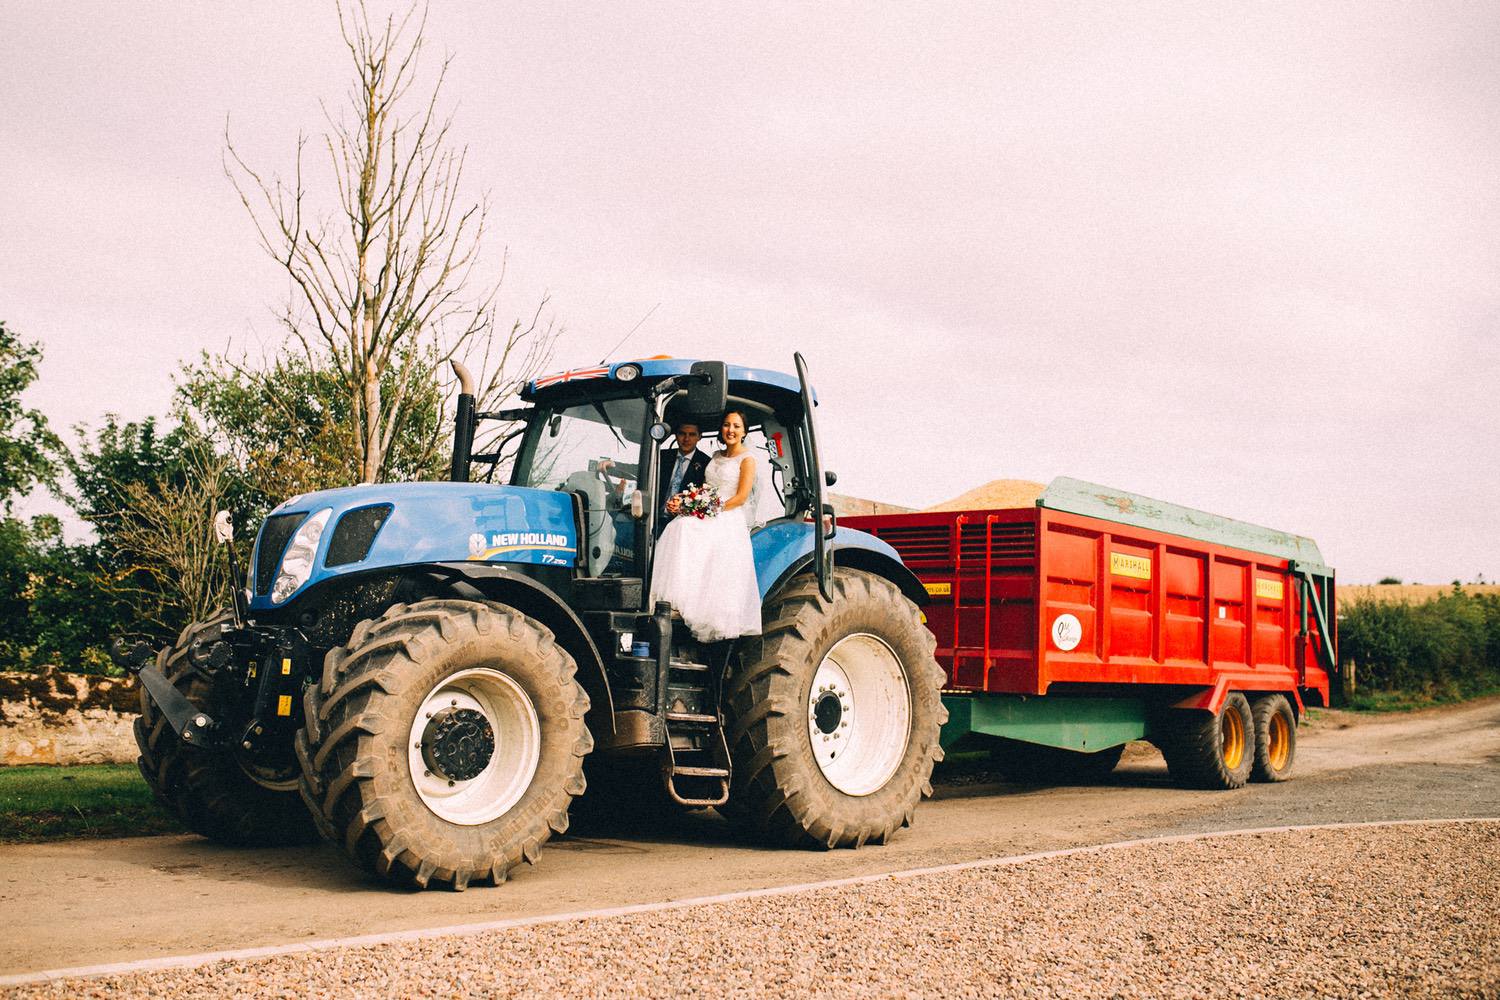 Doxford-Barns-Wedding-Photography-2.jpg